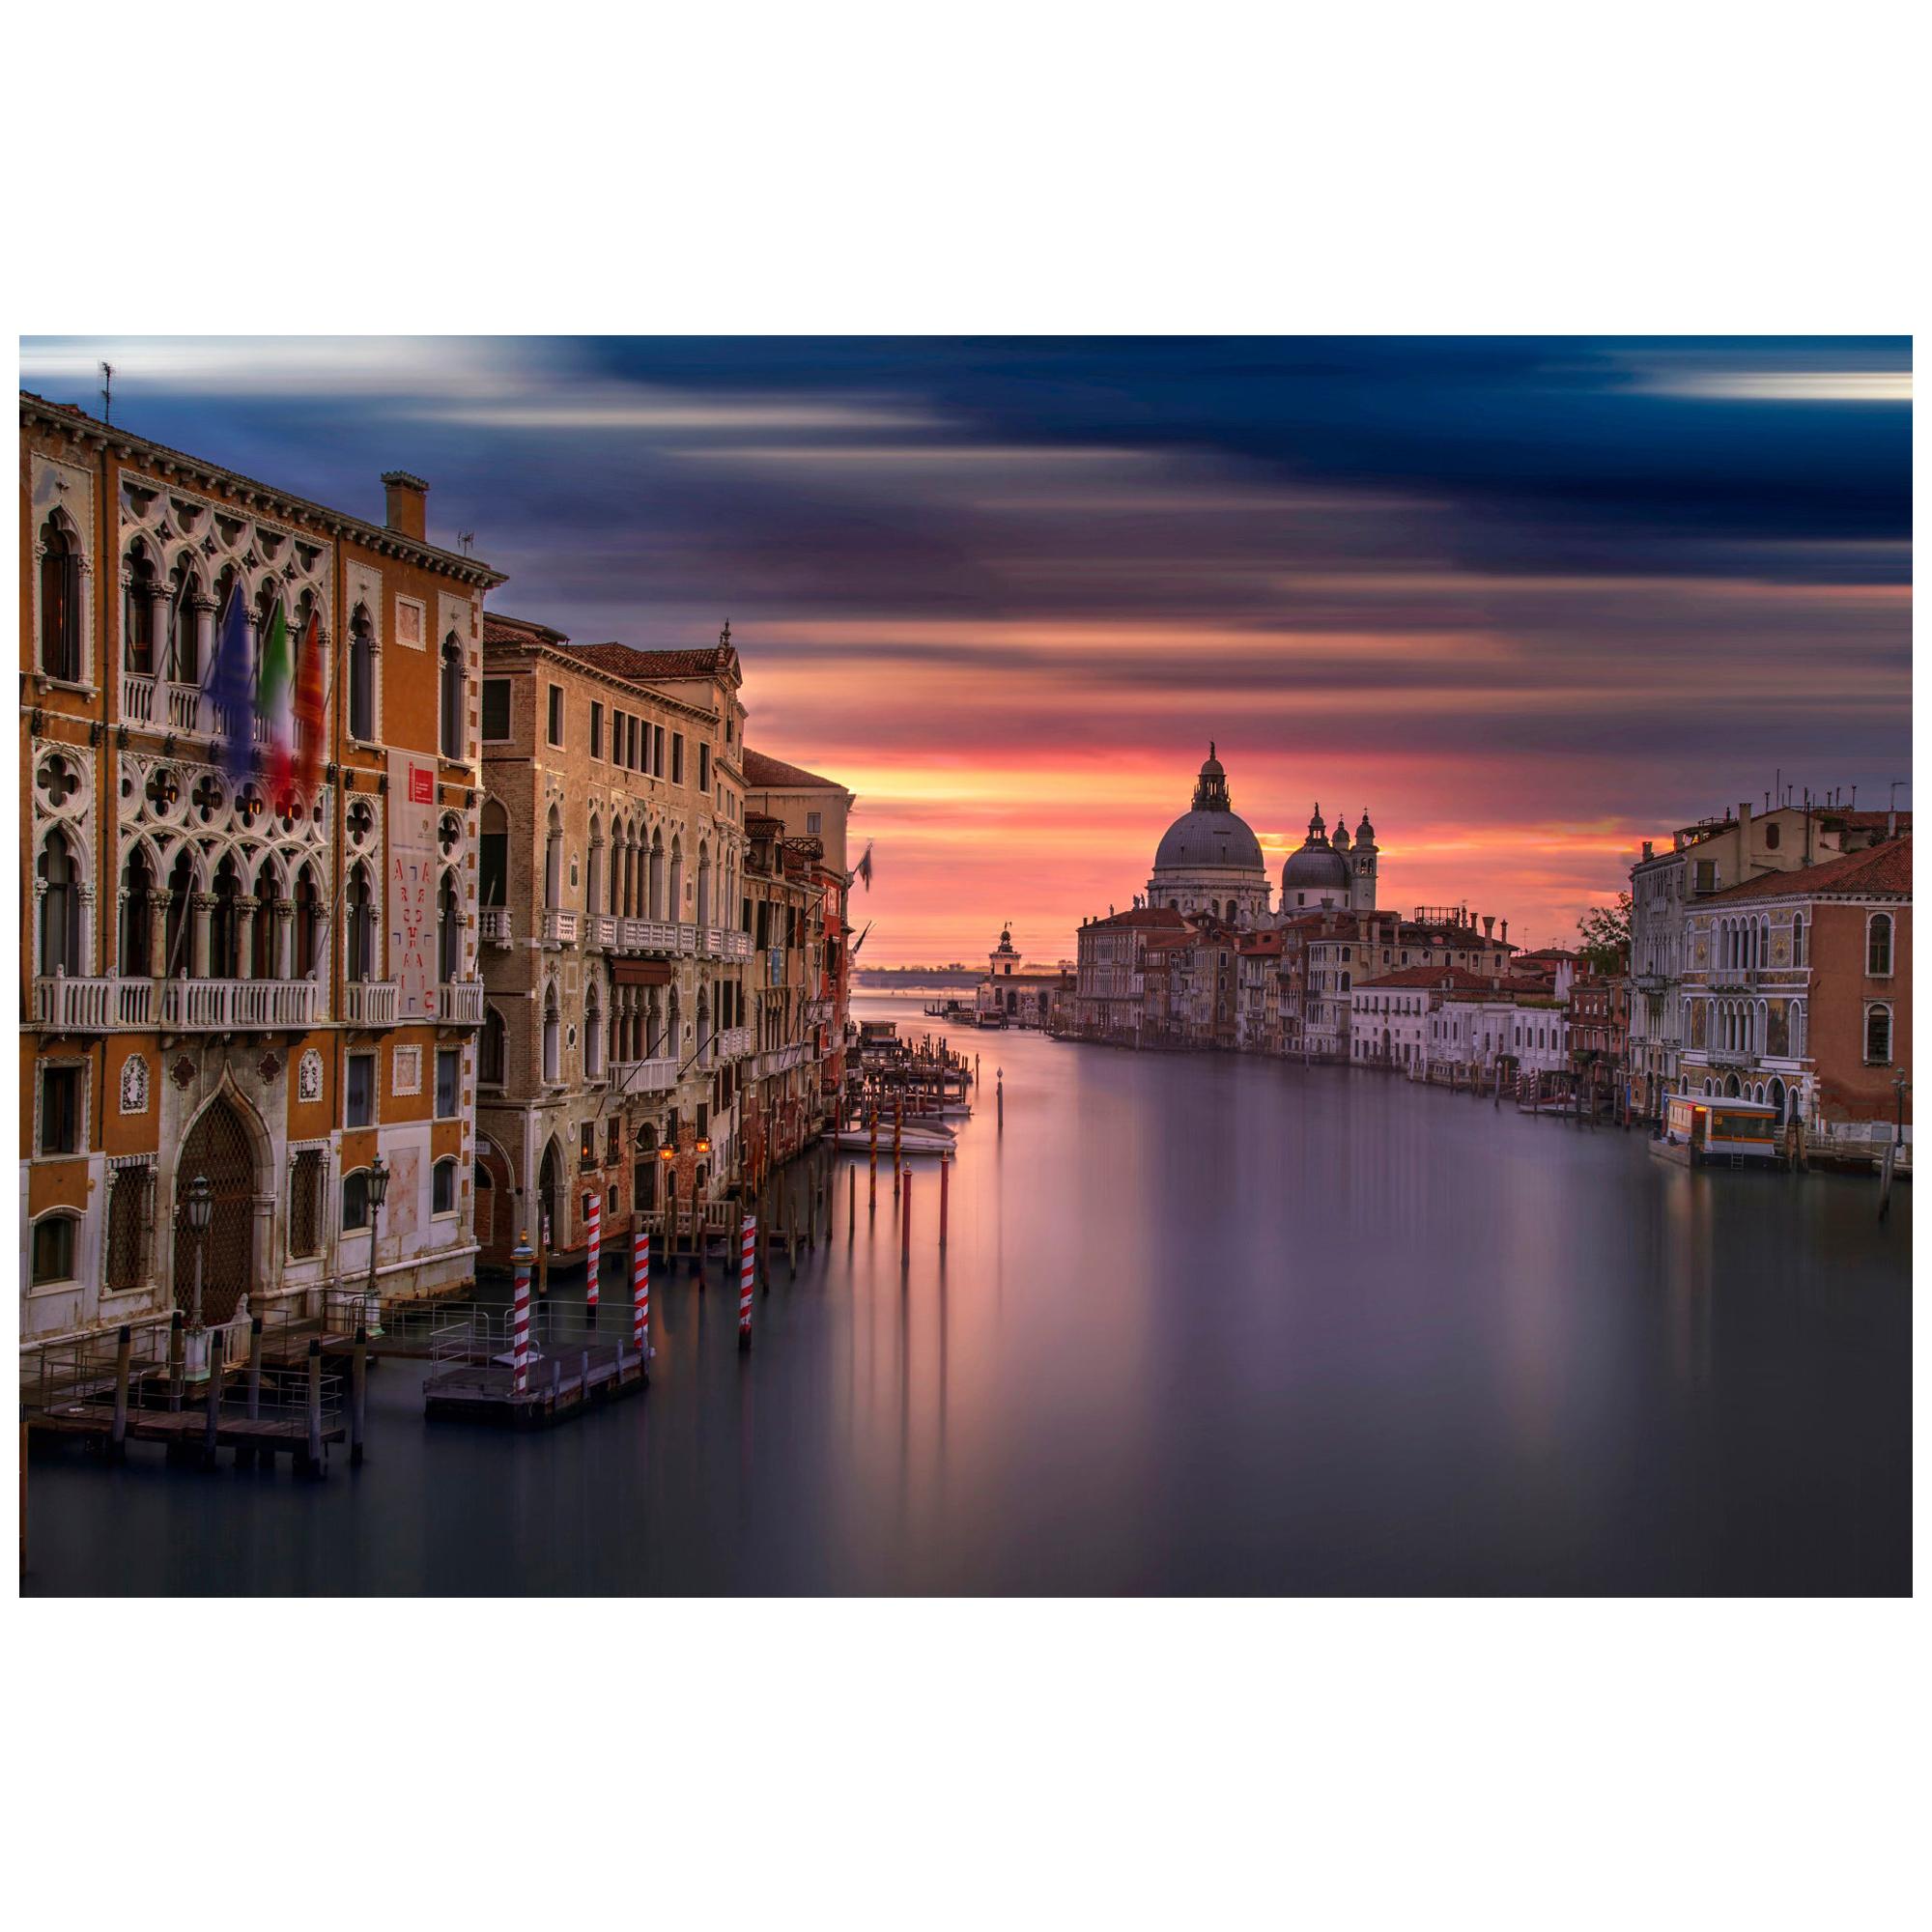 Venice Sunrise Color Photography, Fine Art Print by Rainer Martini For Sale